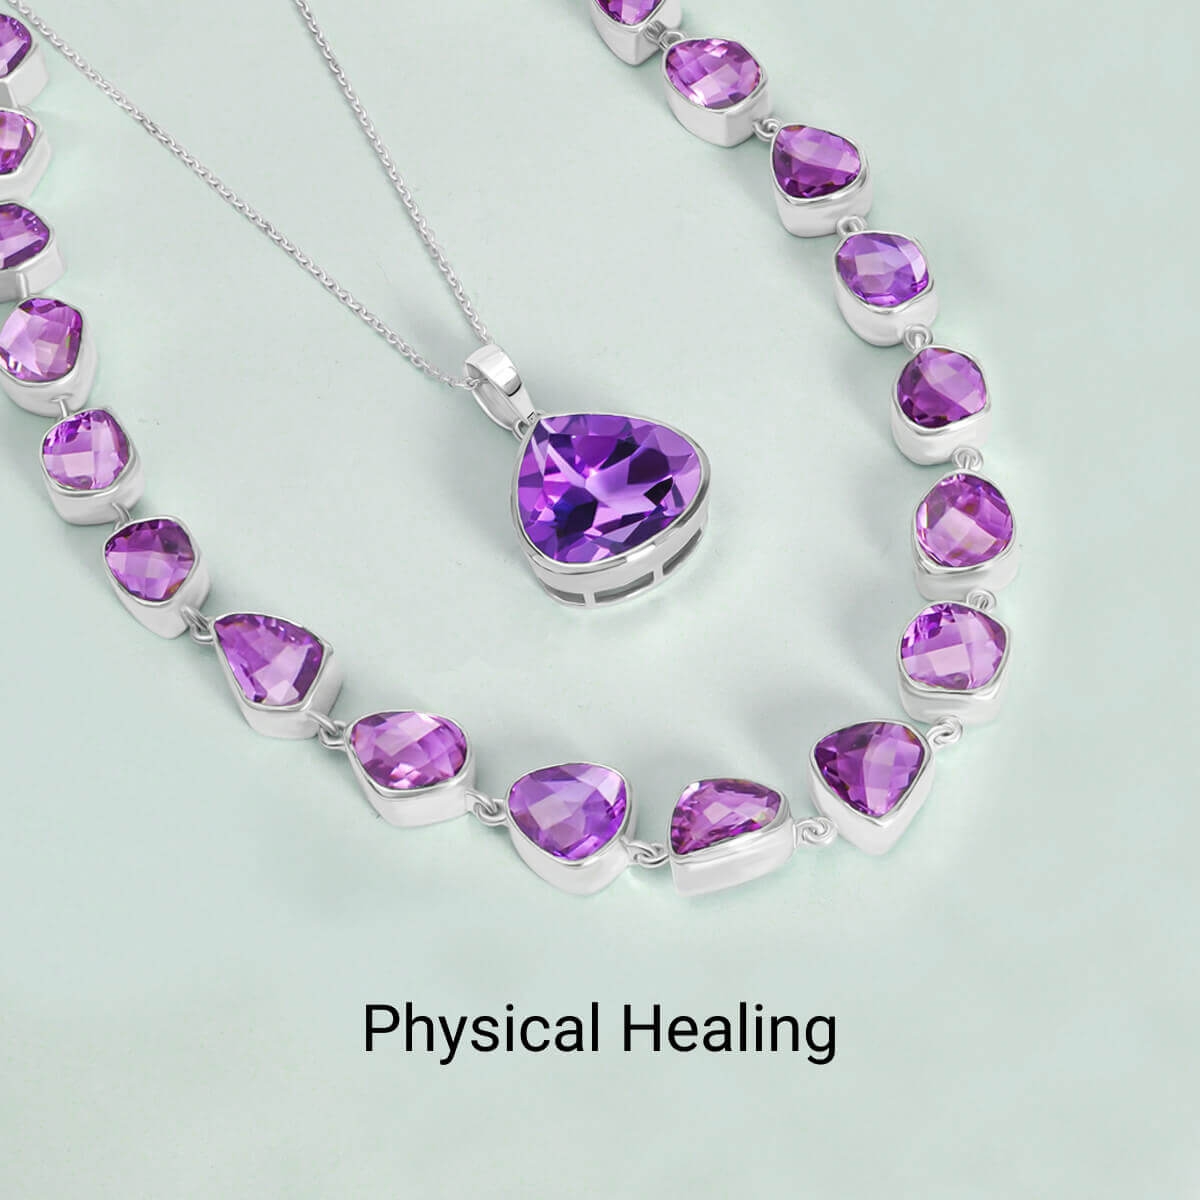 Physical healing properties